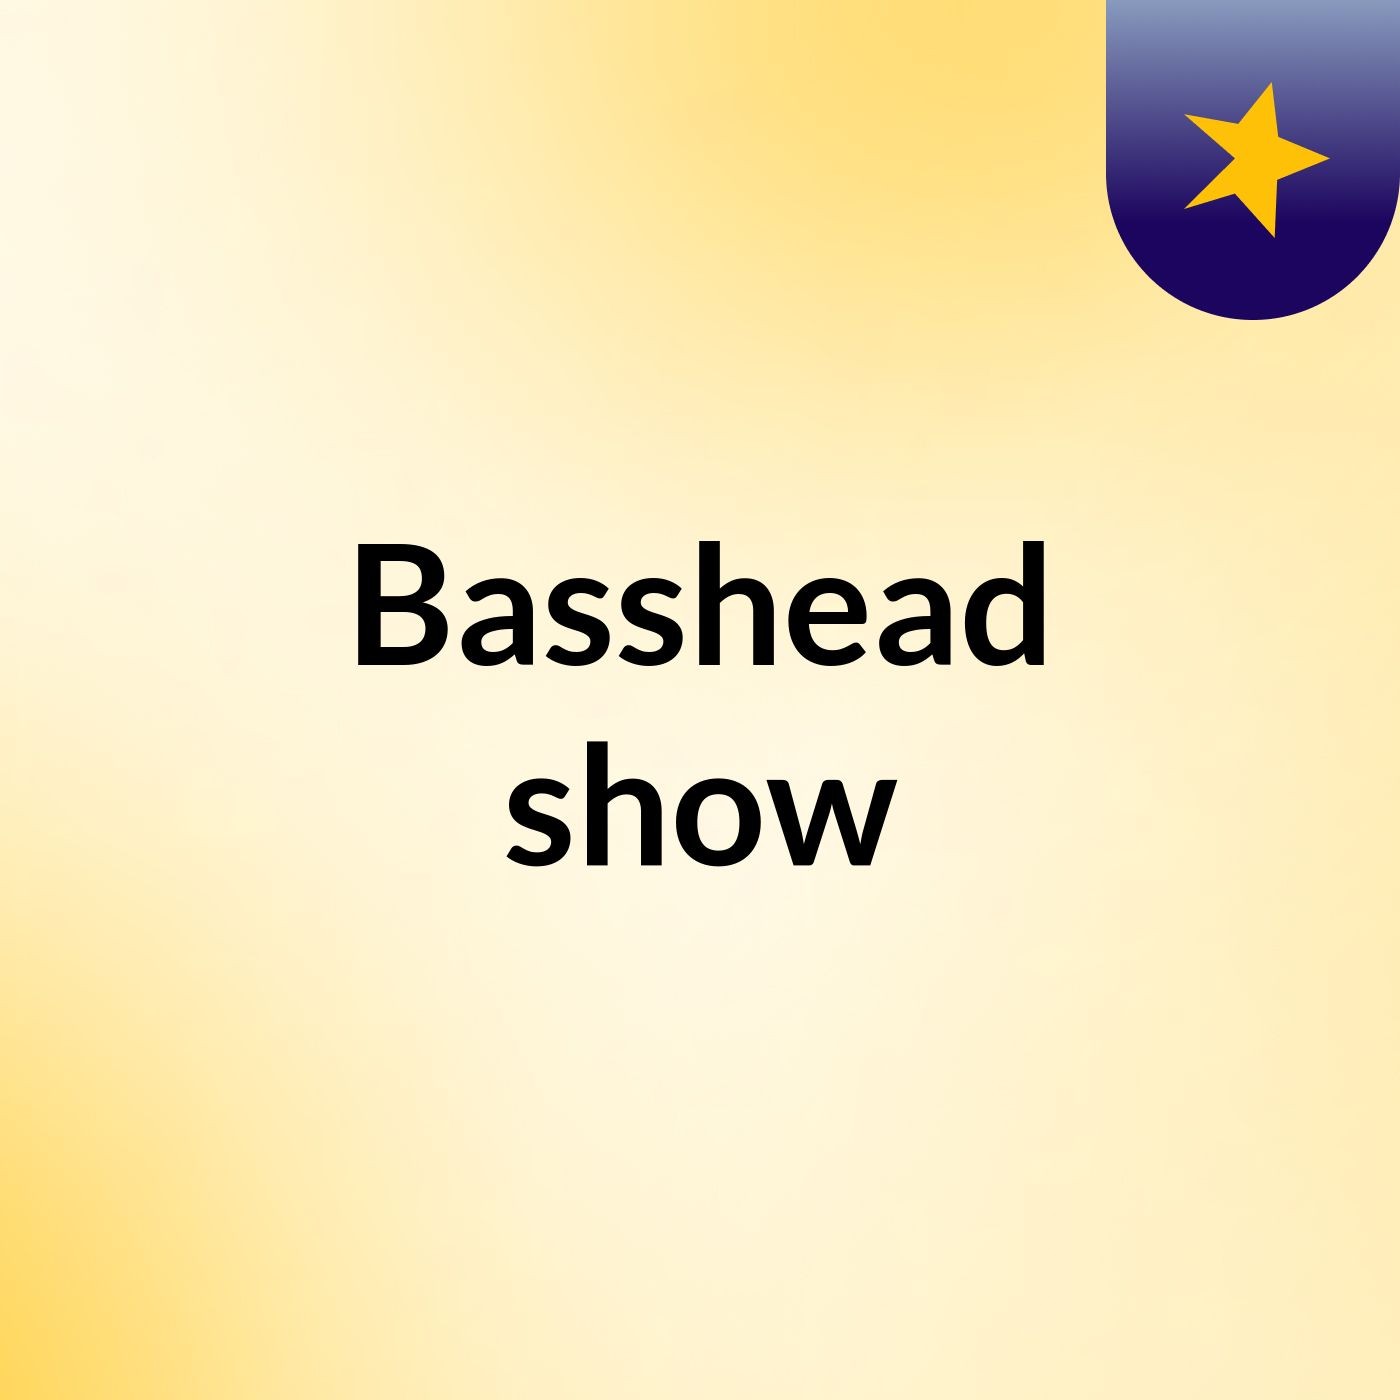 Basshead show